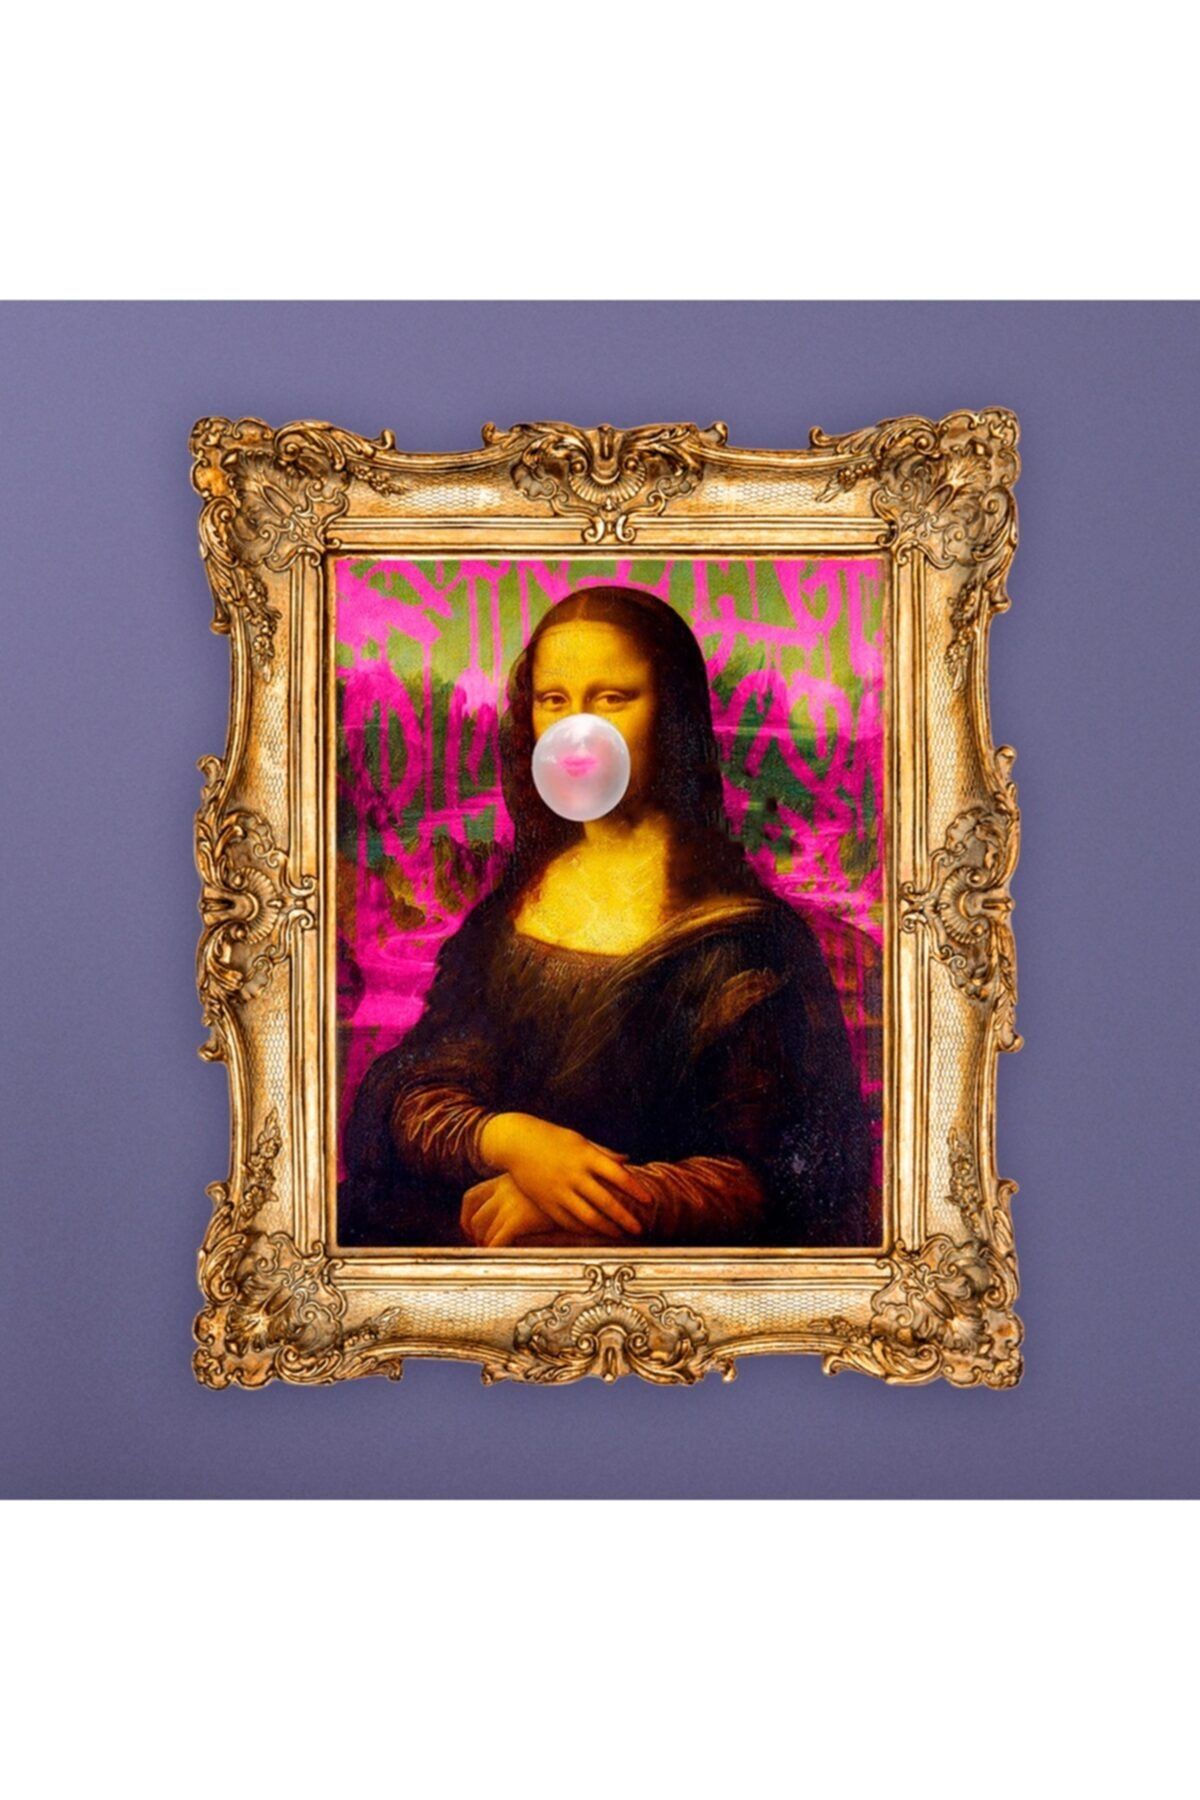 Olamia Ola Mia Mona Lisa Figürlü Vintage Çerçeve Görünümlü %100 Mdf Duvar Tablosu